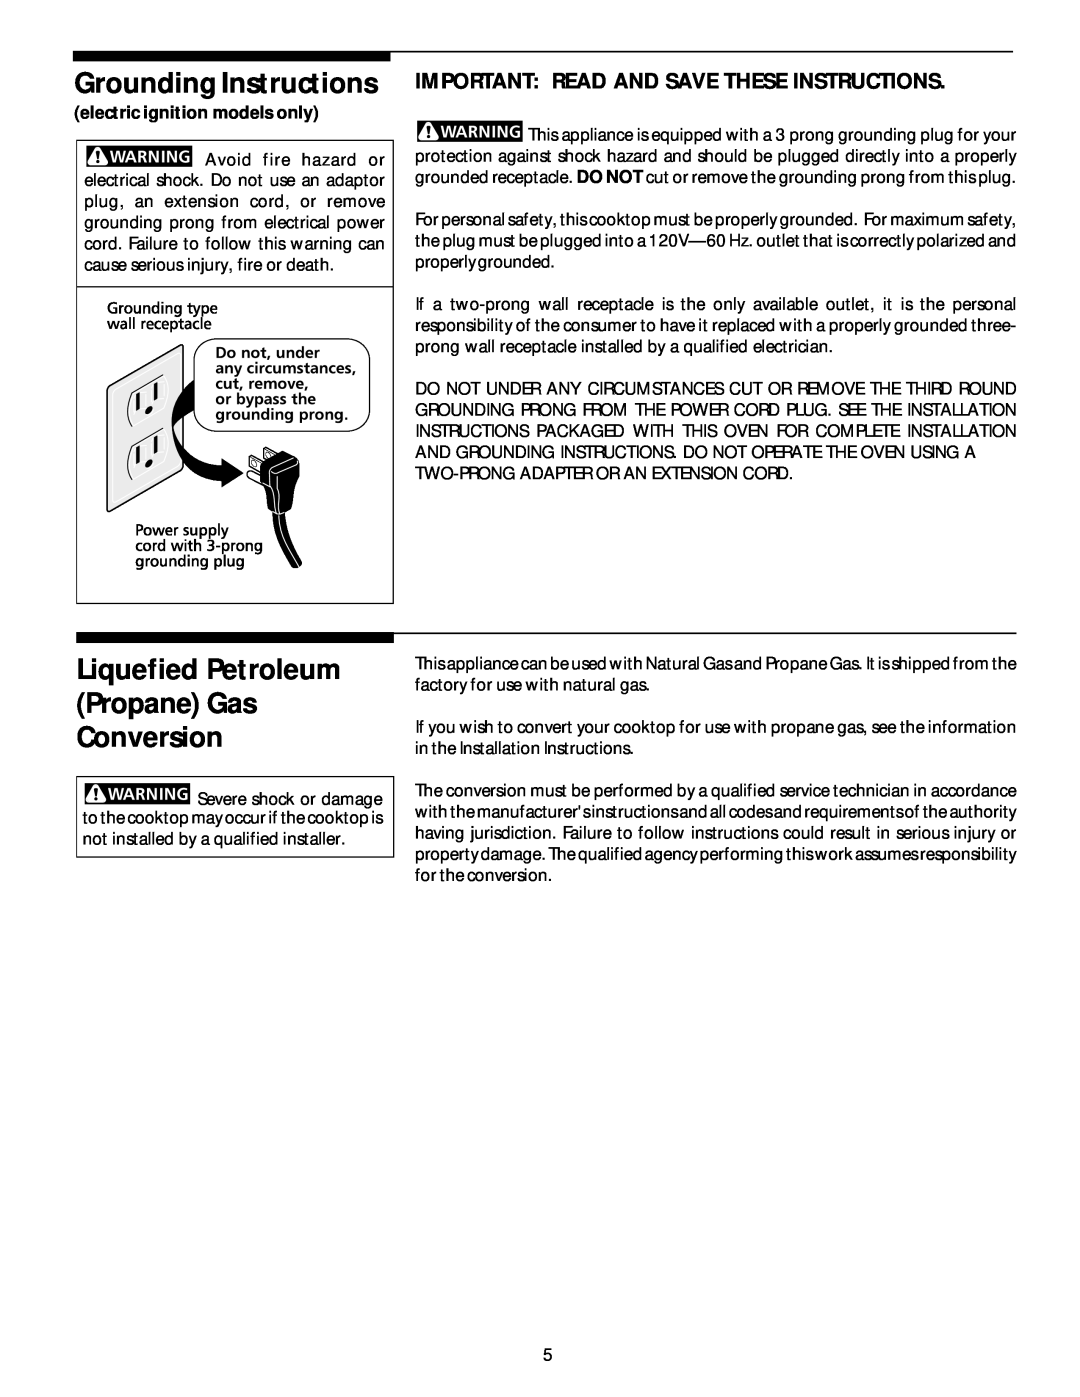 White-Westinghouse 318132200 manual Grounding Instructions, Liquefied Petroleum Propane Gas Conversion 